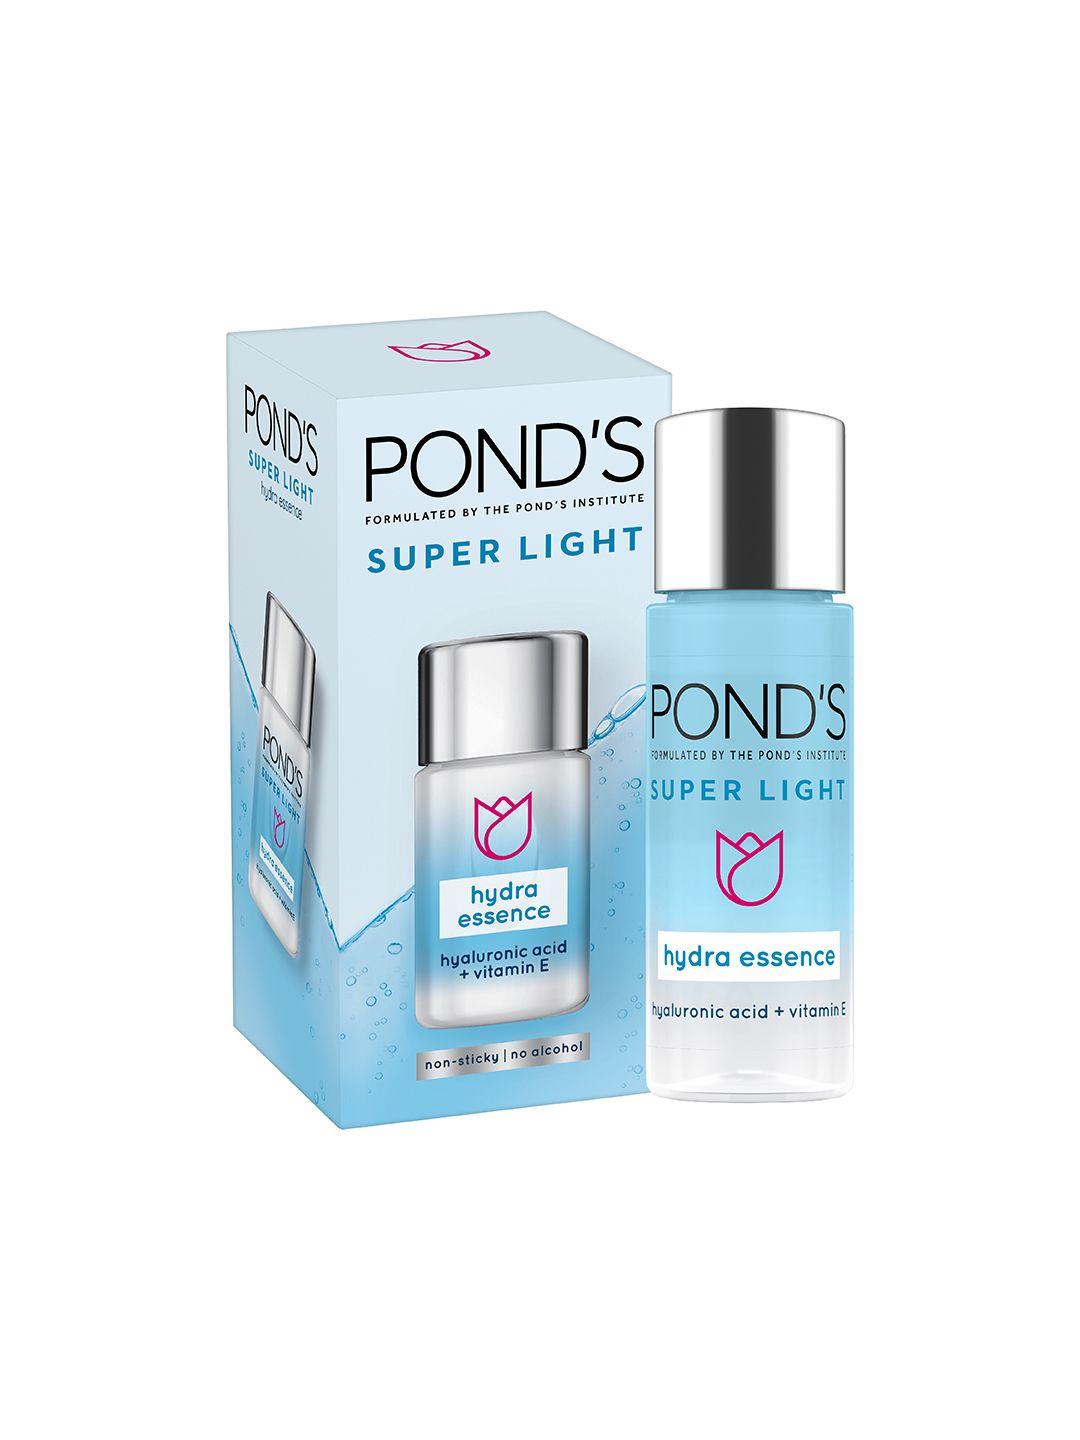 ponds super light hydra essence face serum with hyaluronic acid & vitamin e - 50ml